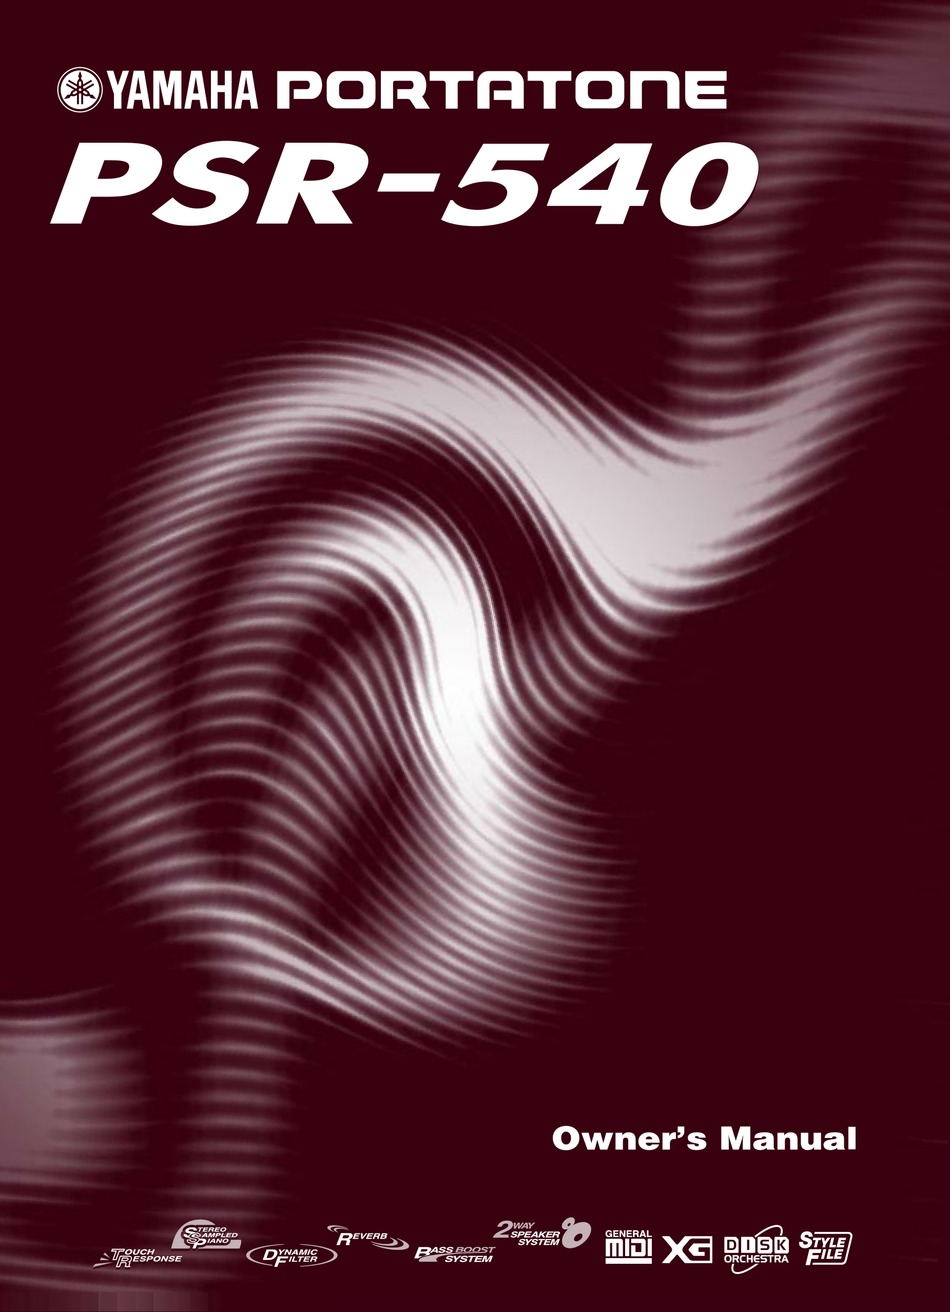 YAMAHA PORTATONE PSR-540 OWNER'S MANUAL Pdf Download | ManualsLib